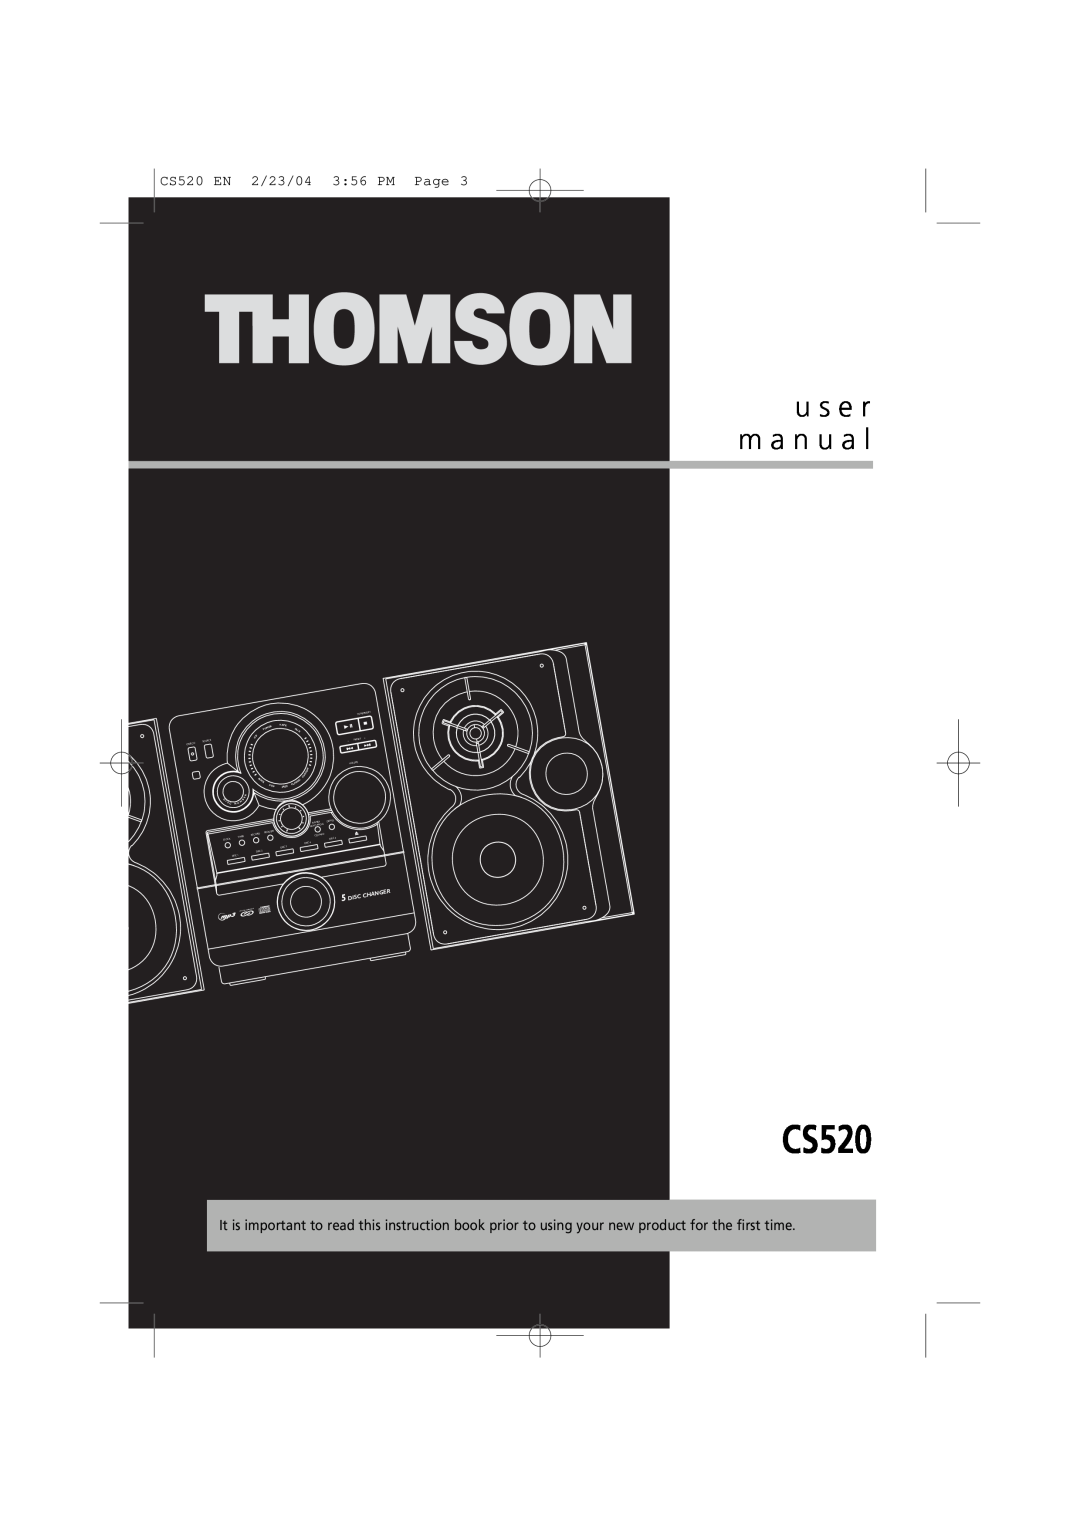 Technicolor - Thomson u s e r m a n u a l, CS520 EN 2/23/04 3 56 PM Page, Ange, C Ch, 5DIS, Tune/Preset, Tape, Volume 